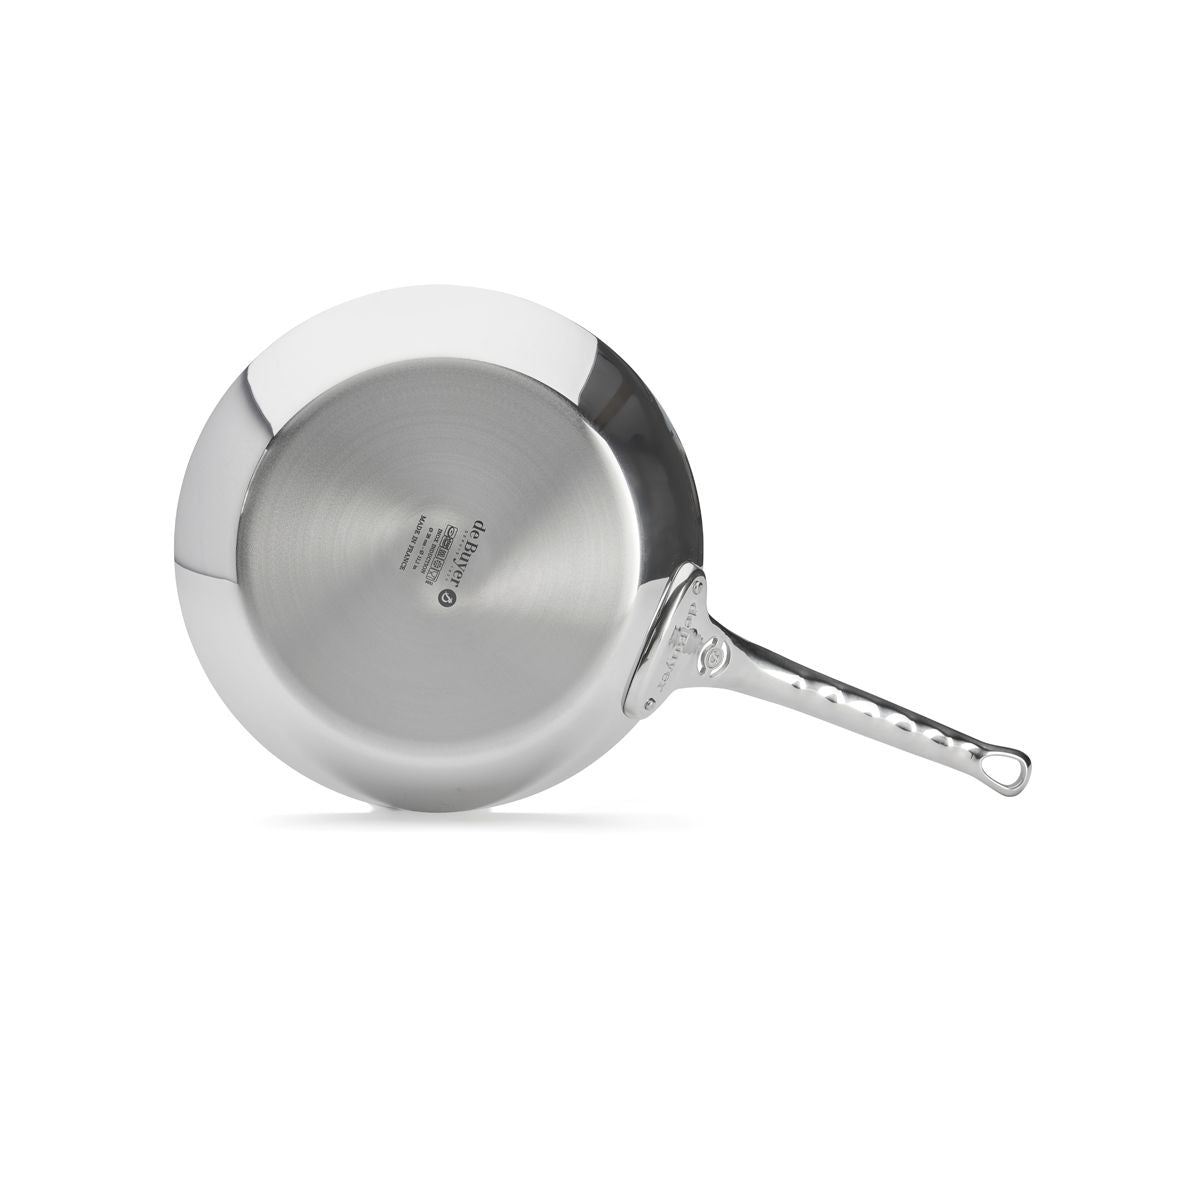 Affinity frying pan